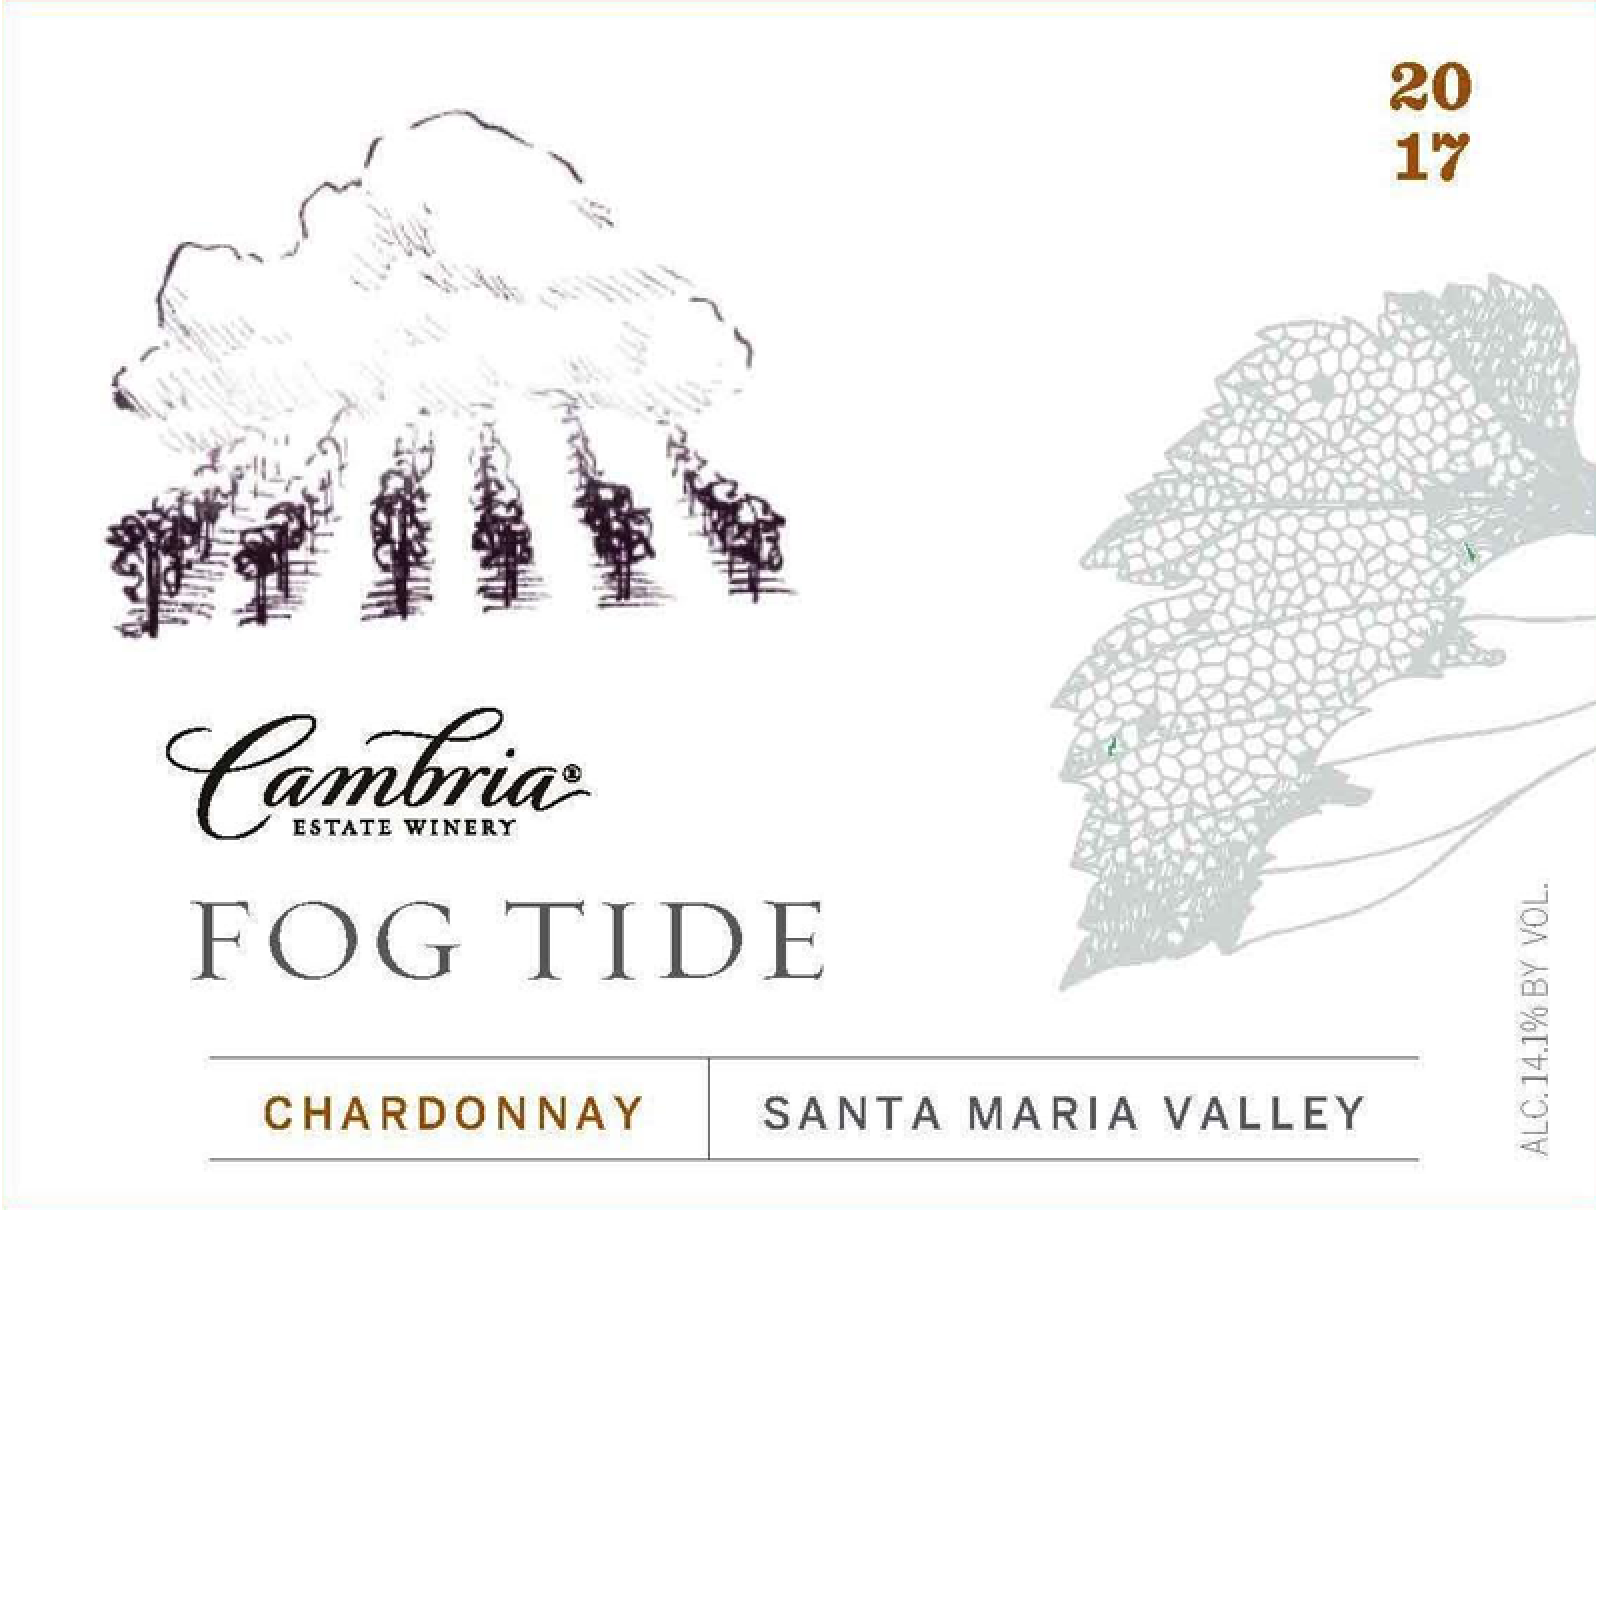 2017 Cambria Estate Winery Fog Tide Chardonnay